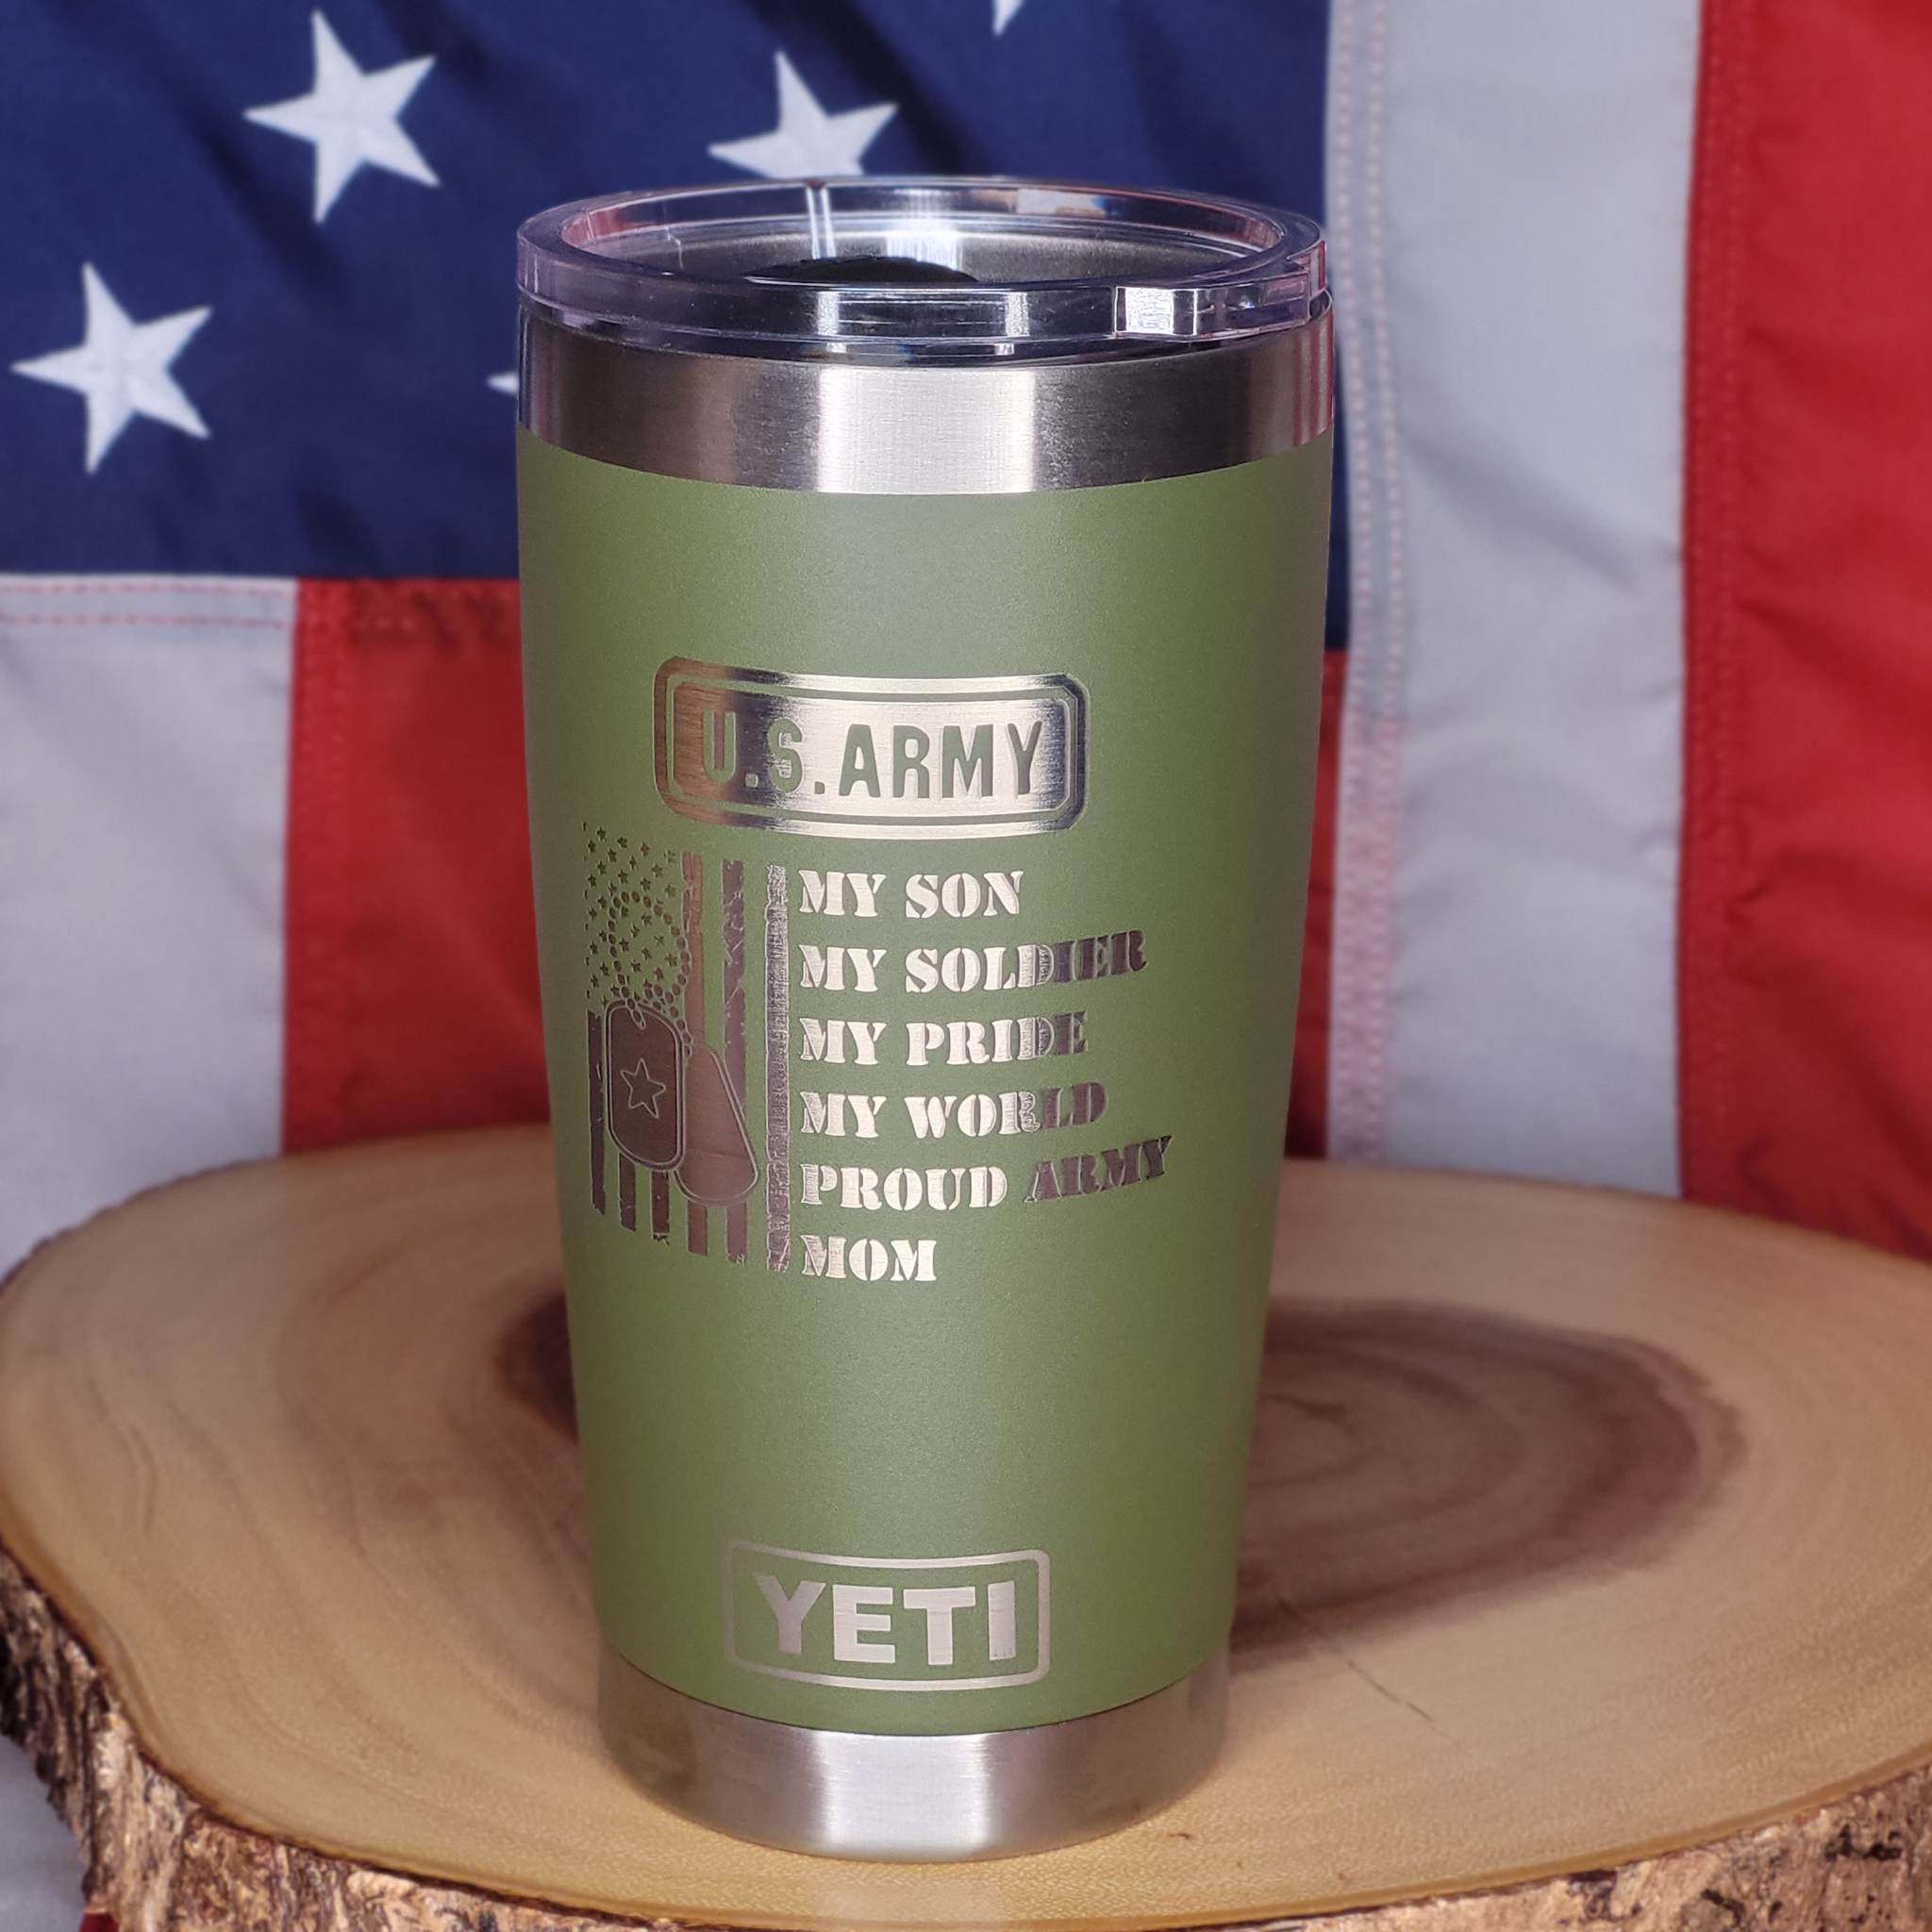 Skin for Yeti Rambler 36 oz Bottle - Army Pride by US Army - Sticker Decal Wrap